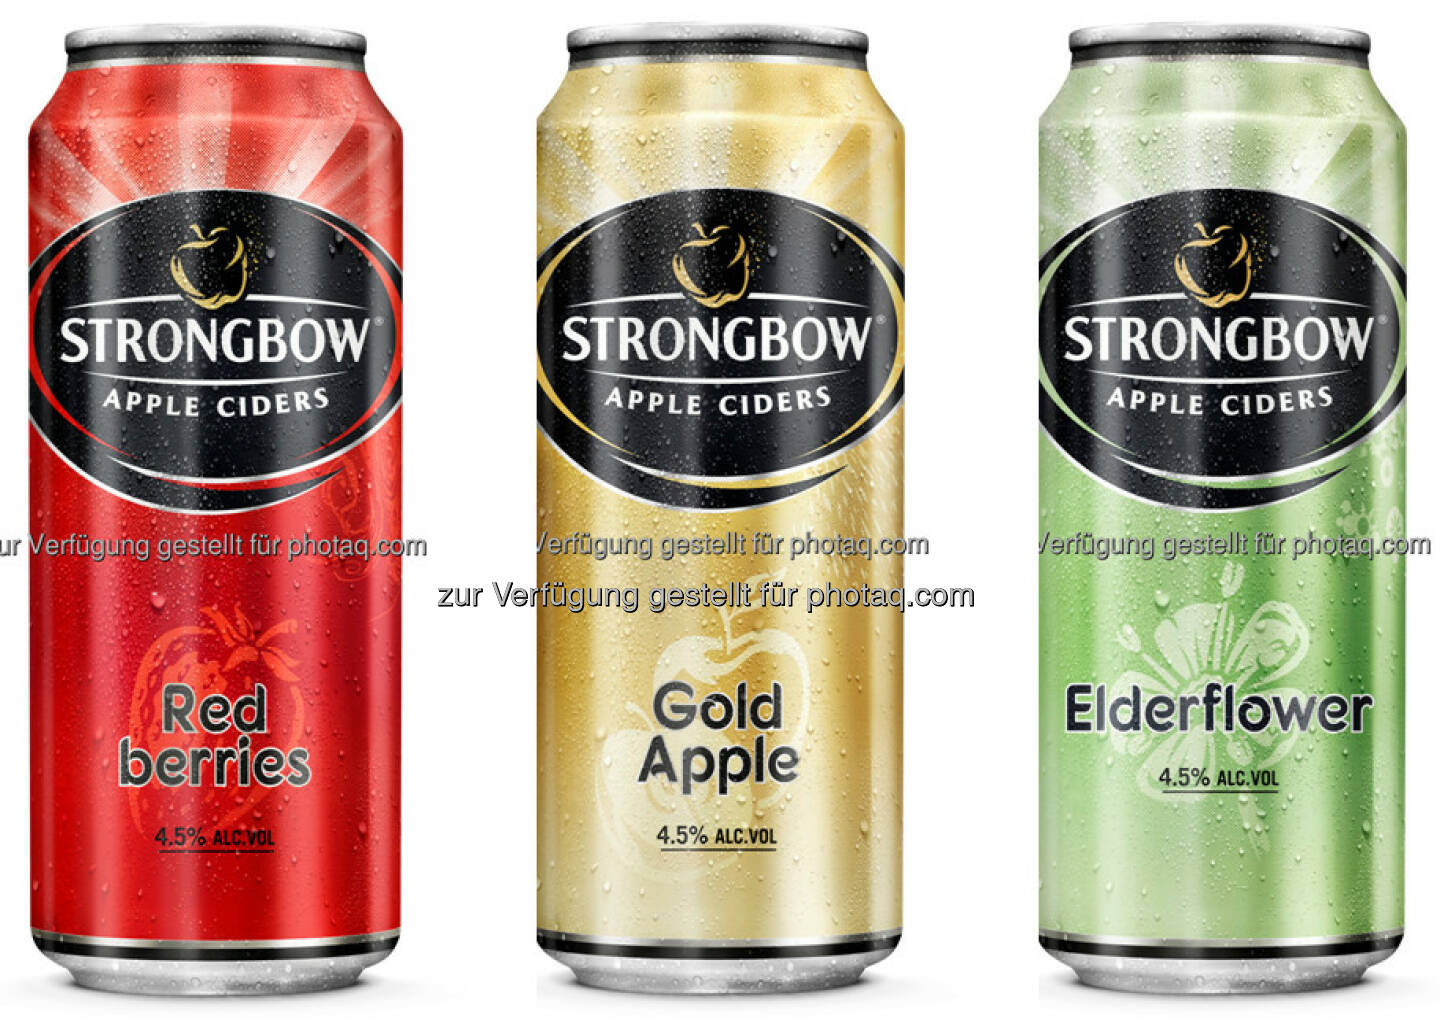 Strongbow Apple Ciders : Strongbow jetzt auch in der 0,4 Liter-Dose : Fotocredit: Brau Union Österreich